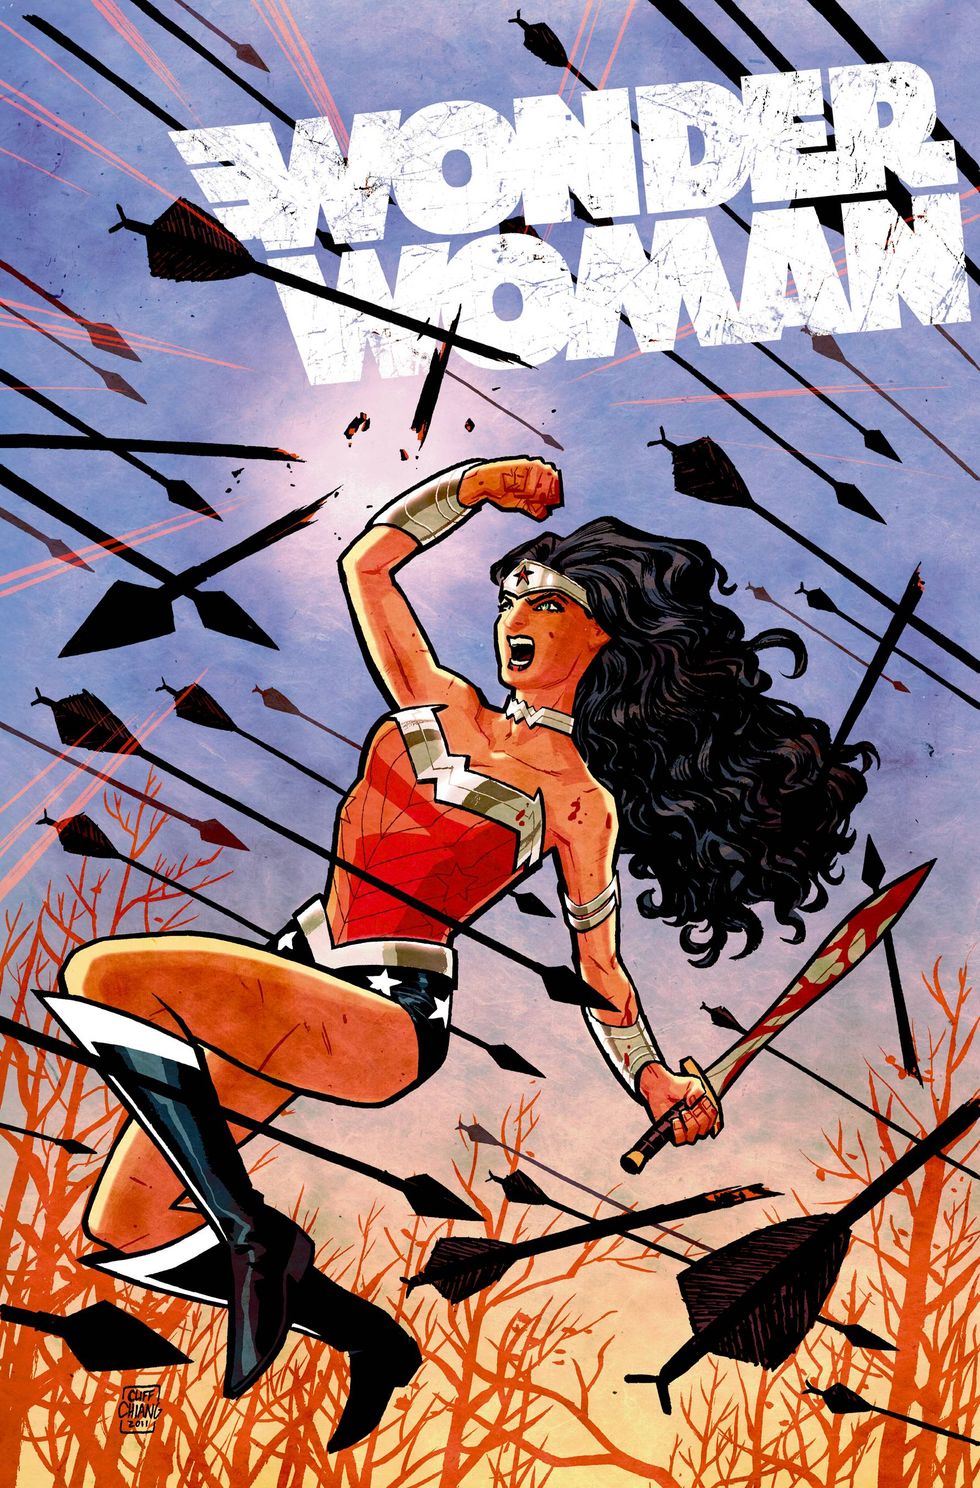 DC COMICS, WONDER WOMAN LOGO CORD BRACELET - Truth, Love, Justice